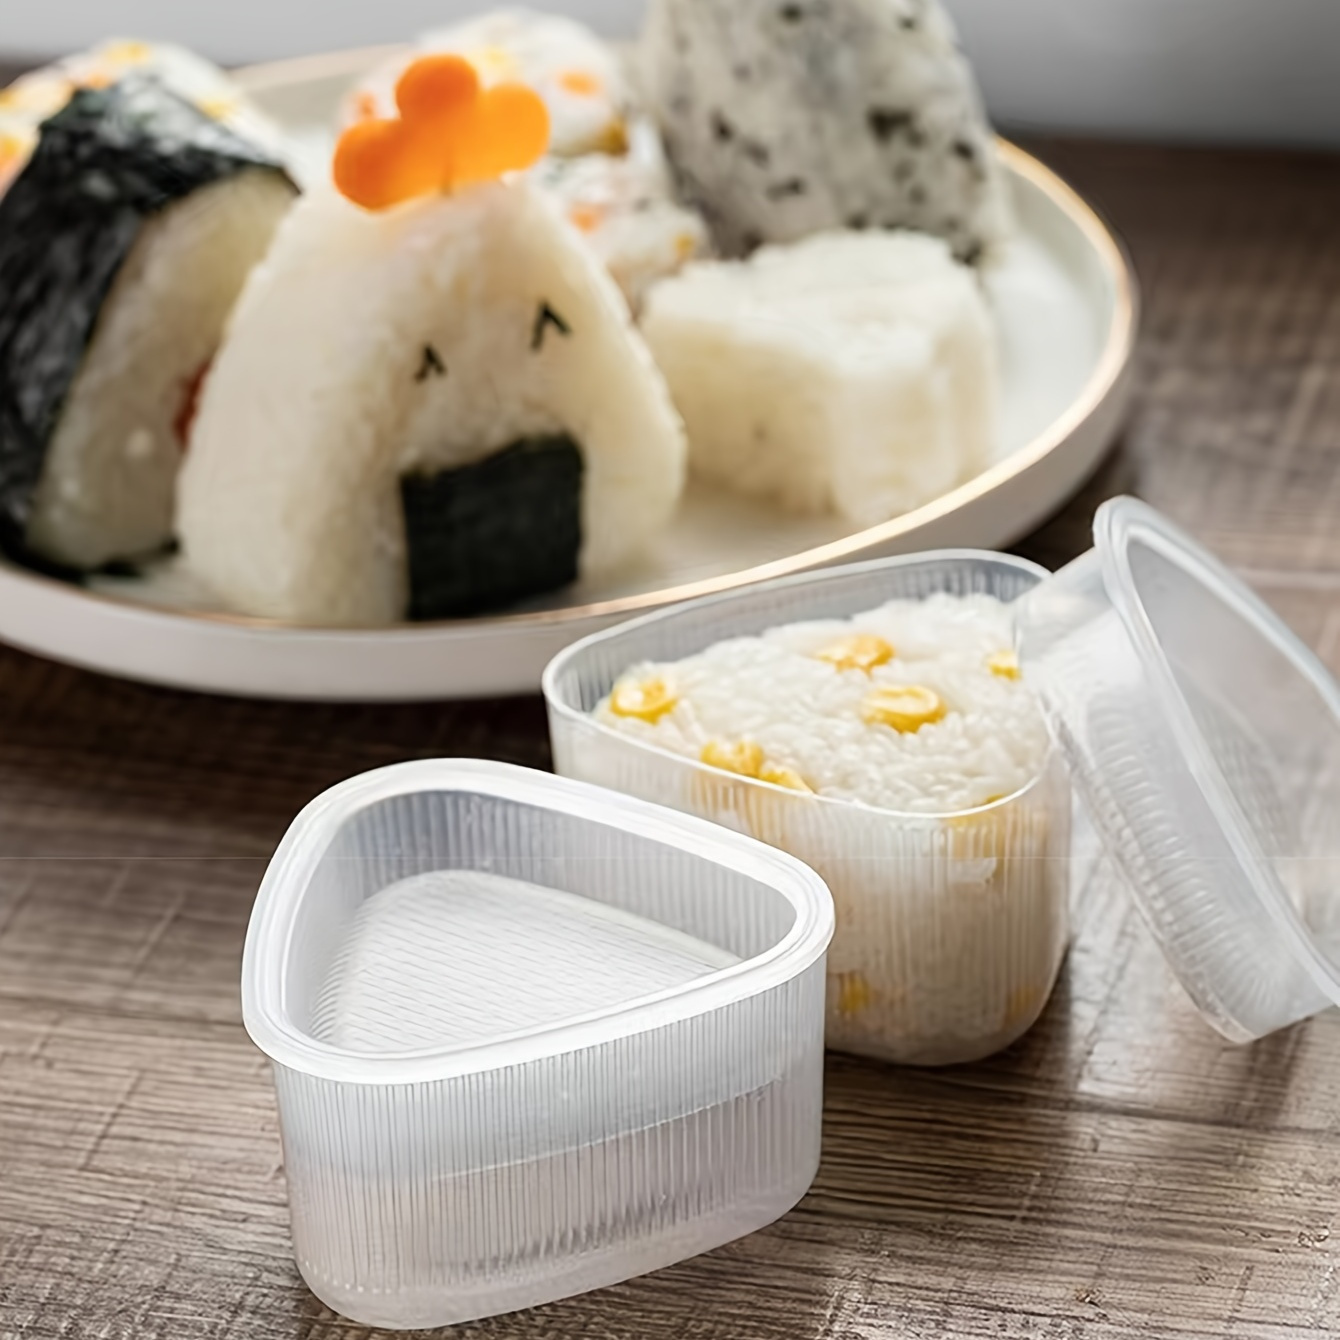 Kawaii Onigiri Messenger Bag Cute Japanese Food Rice Balls 